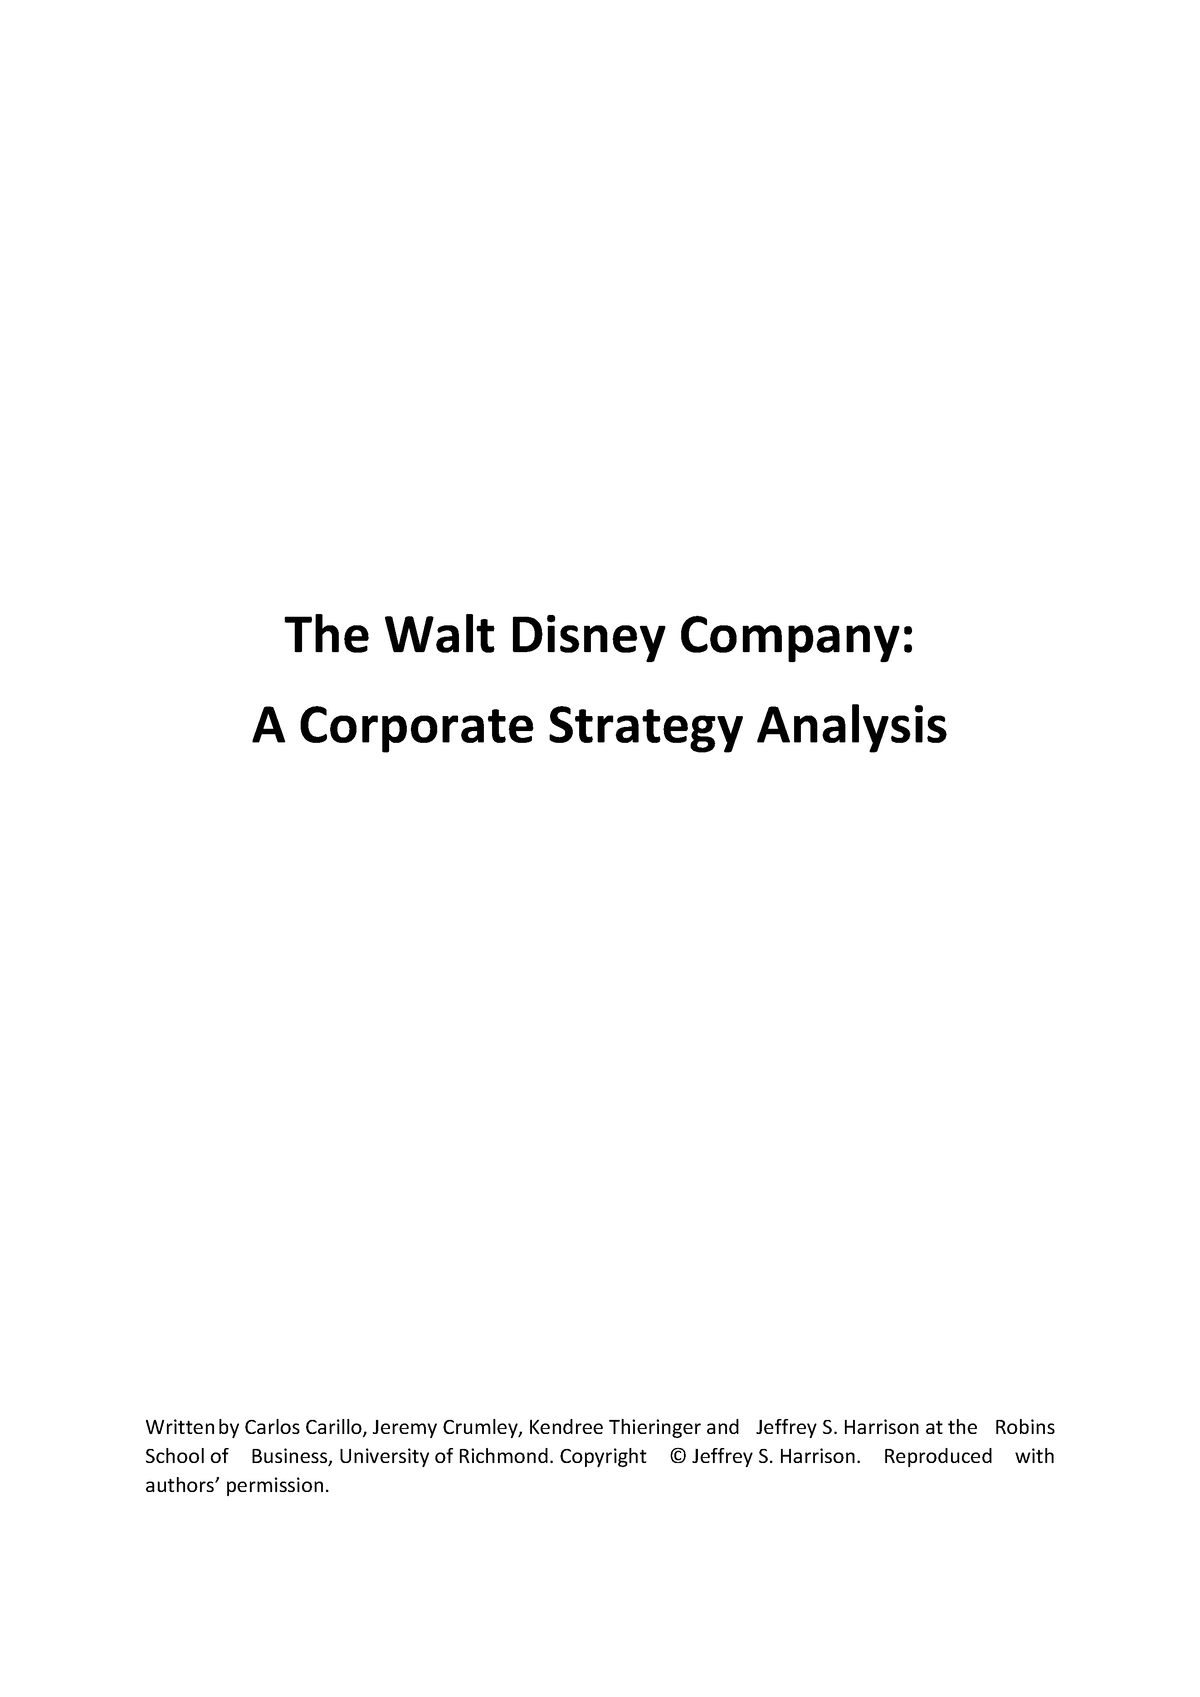 case study marketing strategy of walt disney company